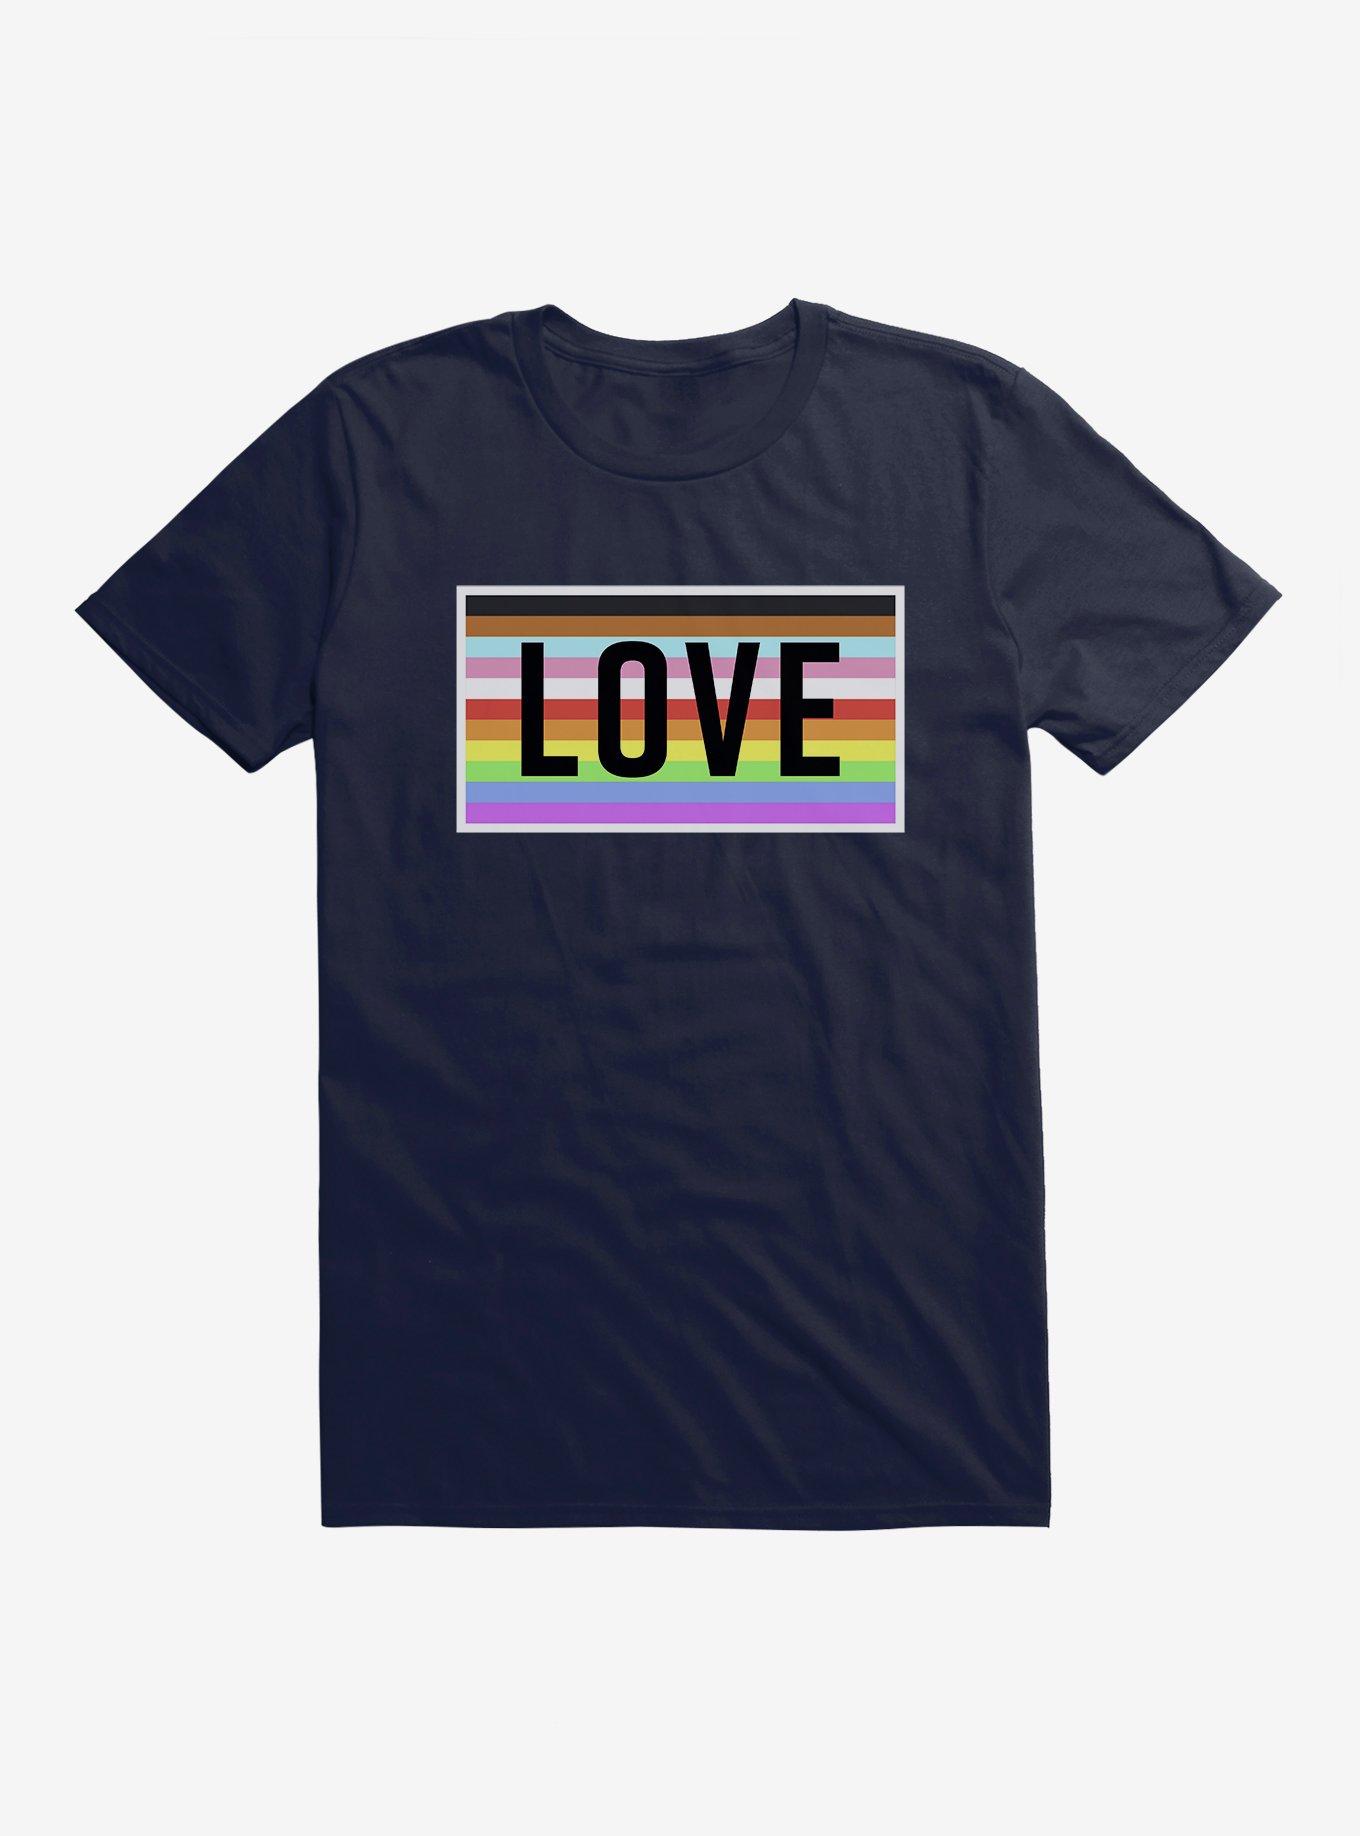 Hot Topic Foundation LOVE T-Shirt, NAVY, hi-res